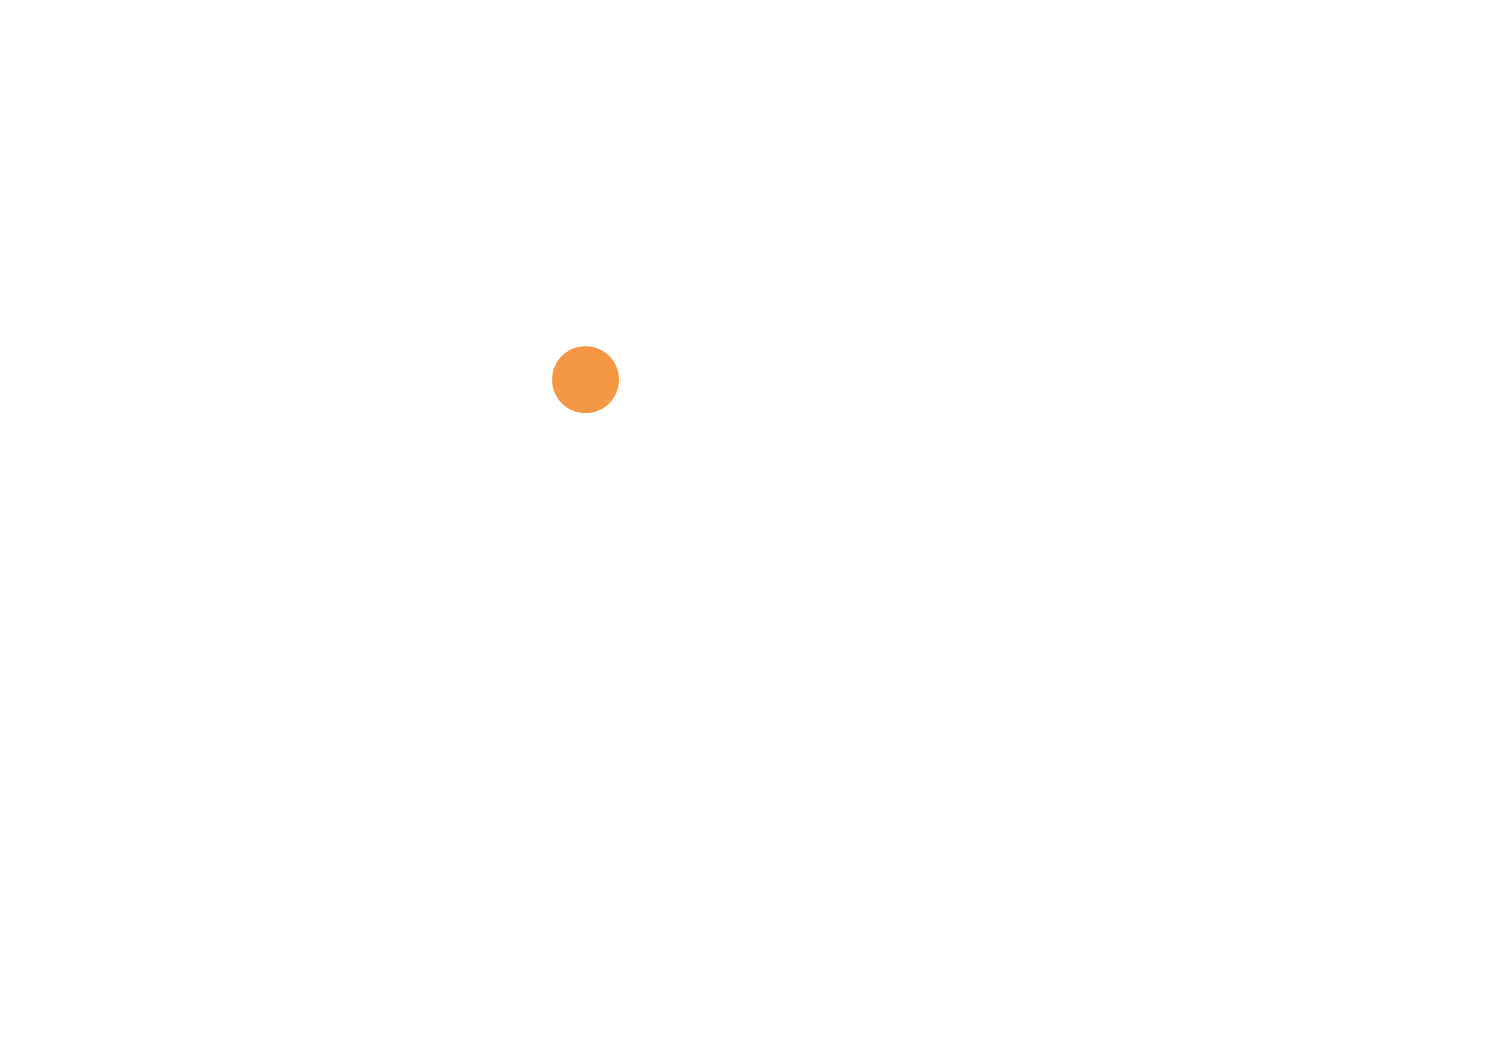 Niso Charge